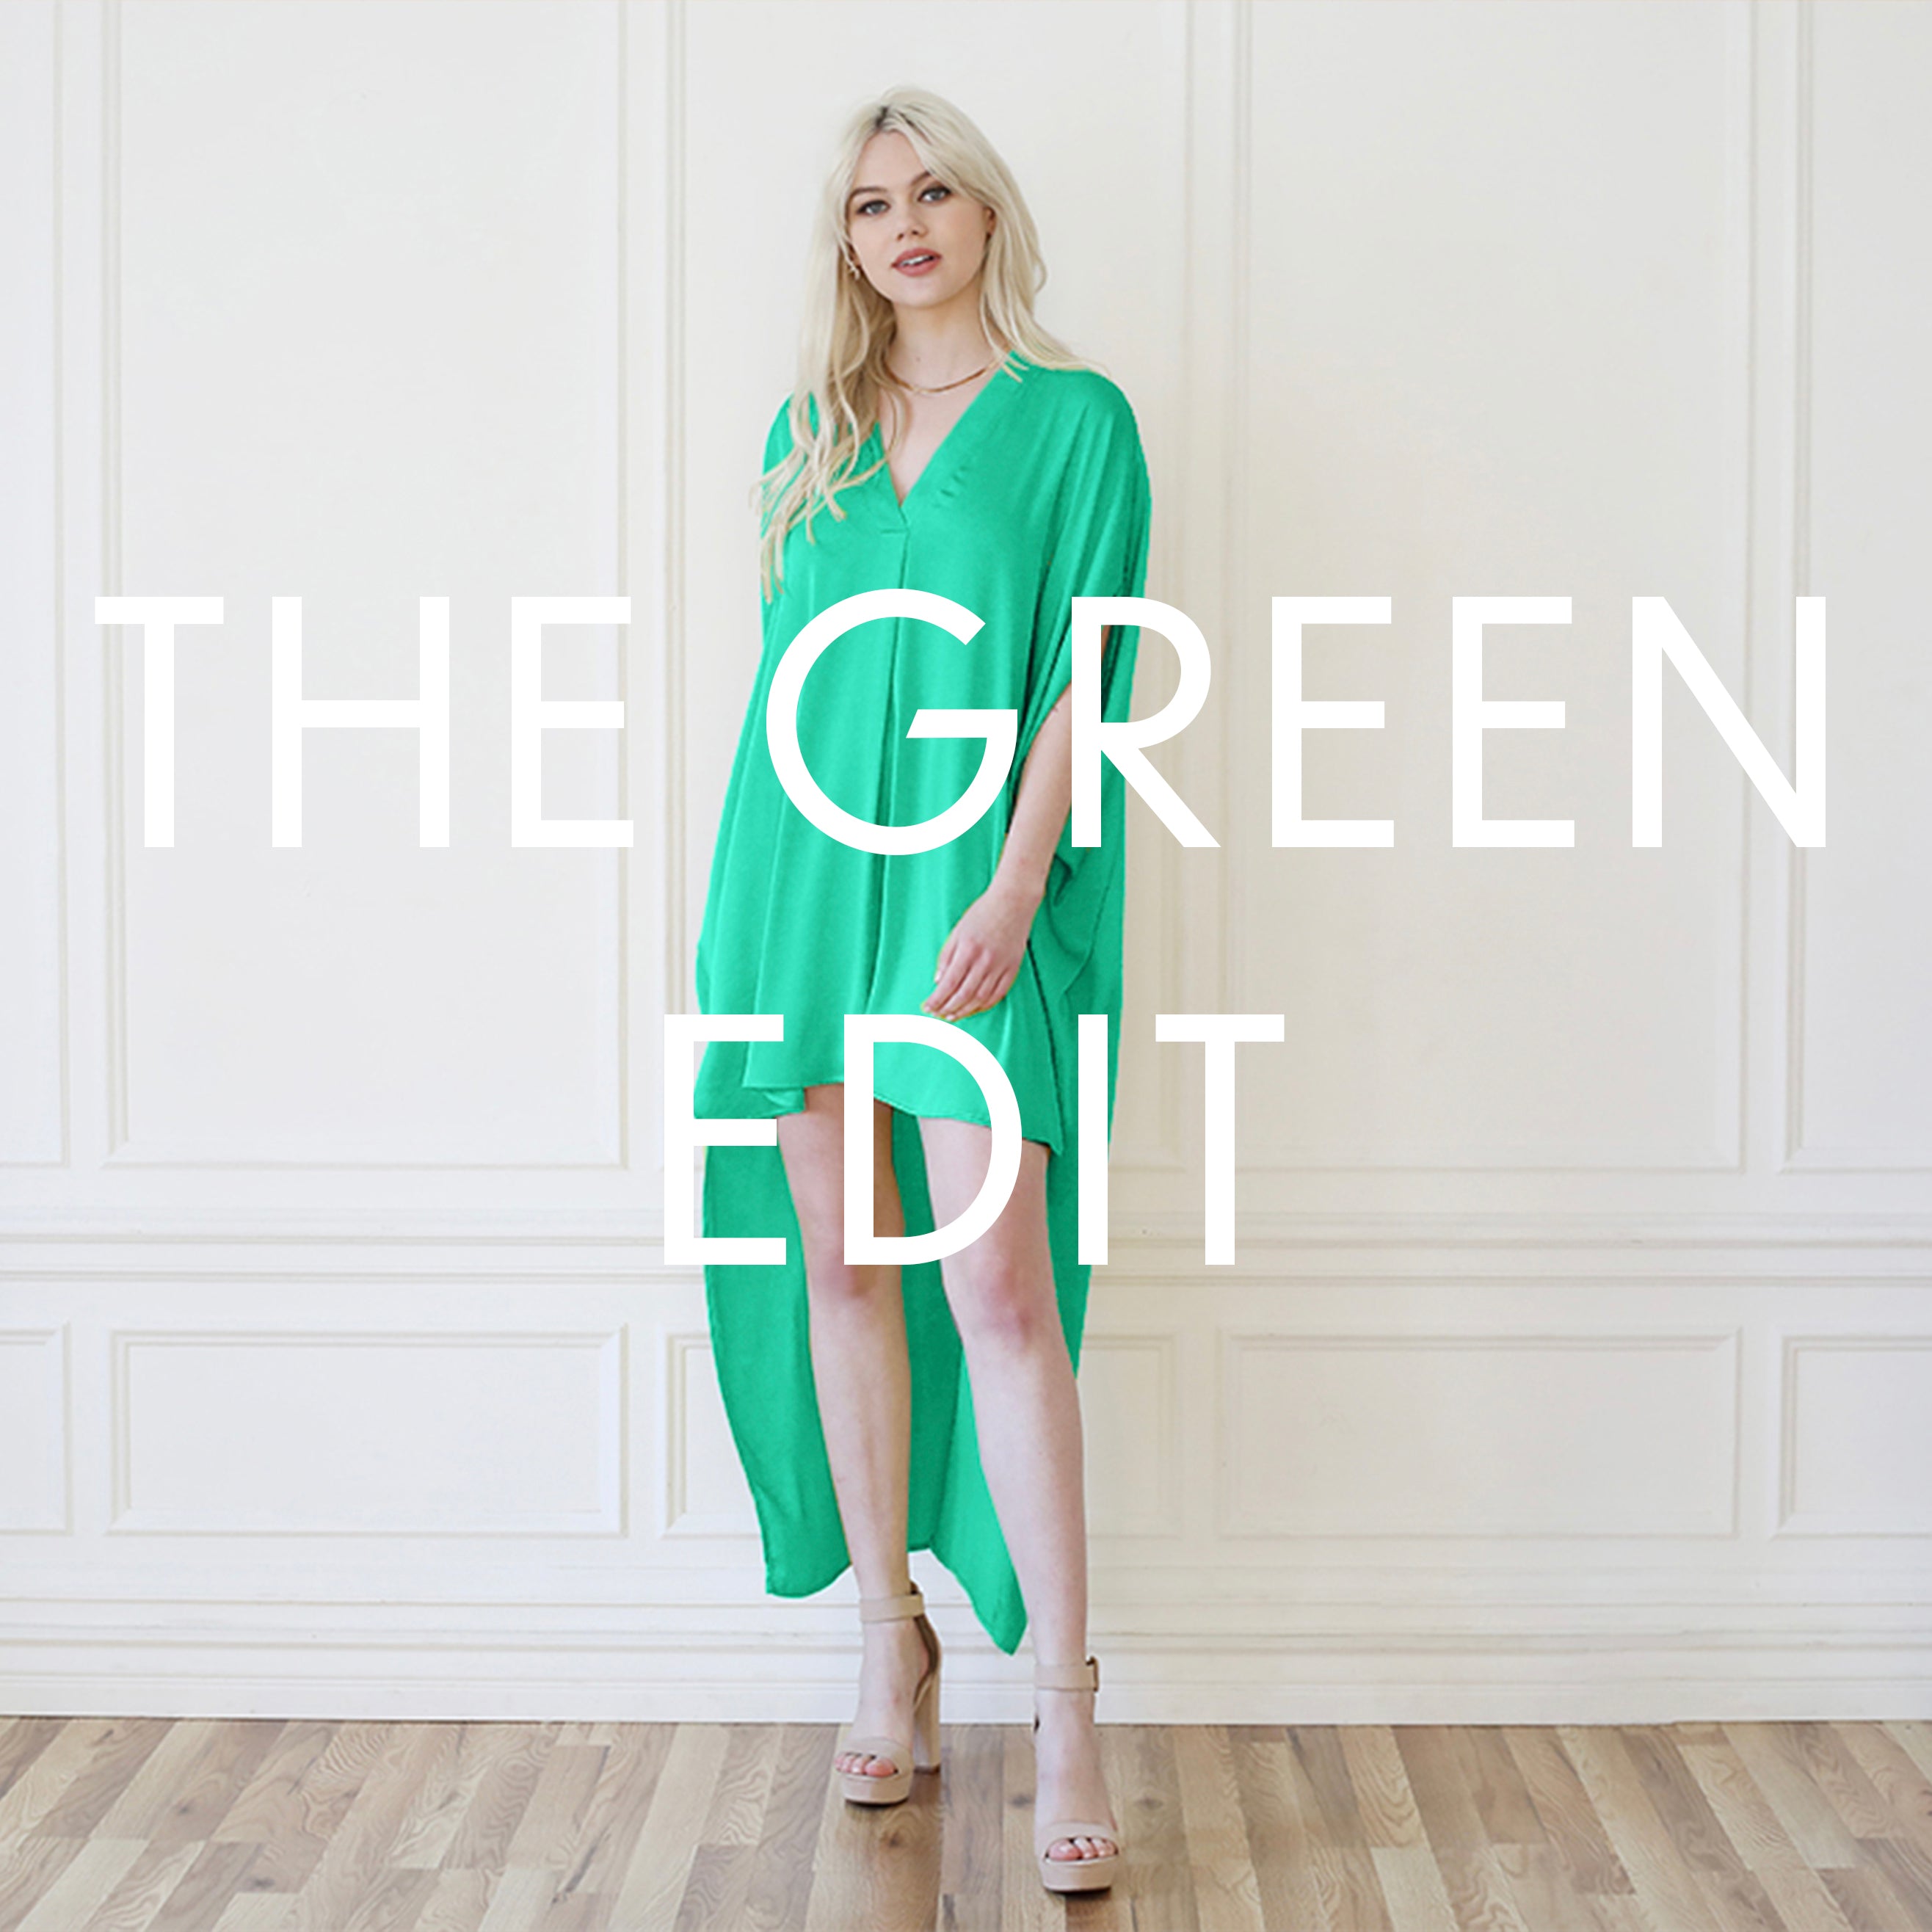 The Green Edit